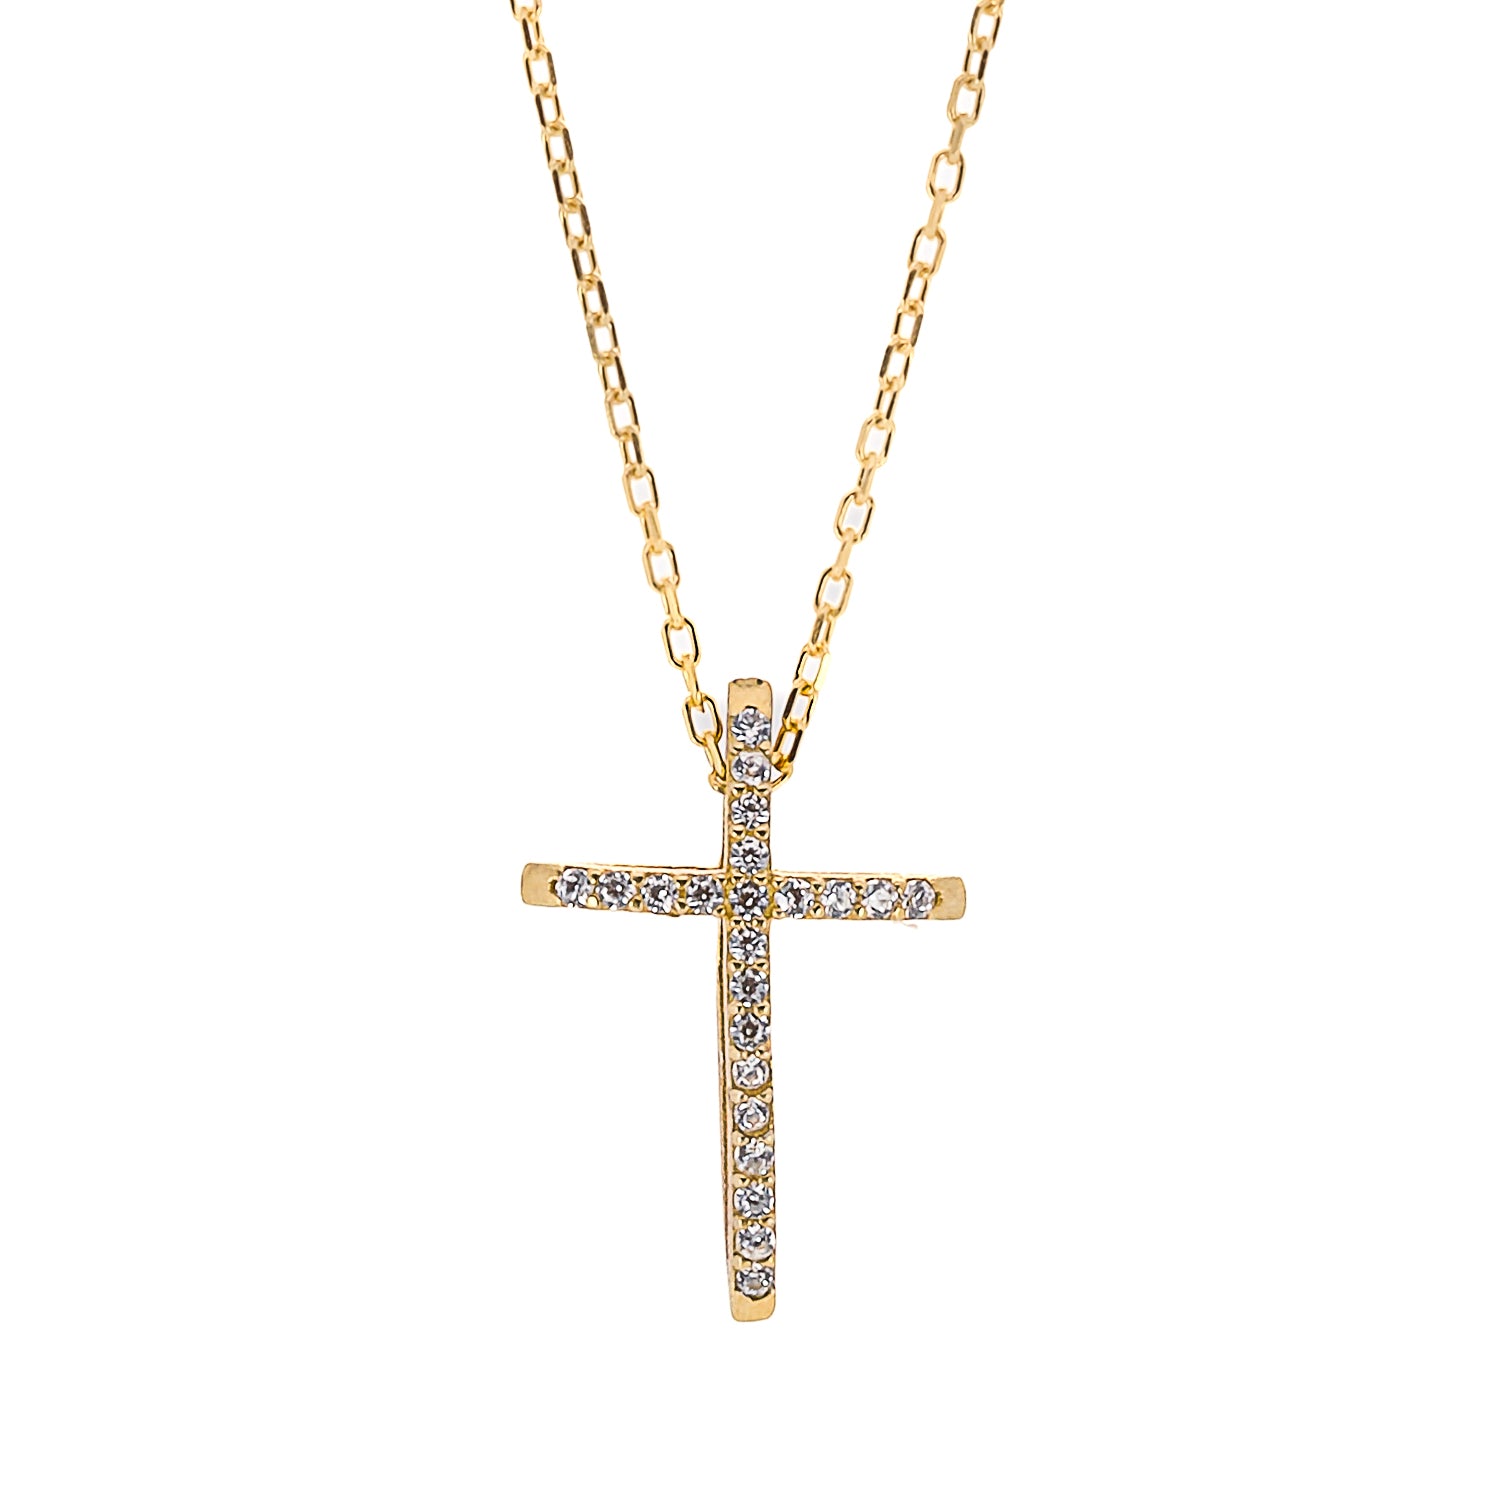 The Unique Cross Diamond Necklace, a symbol of faith and spirituality.